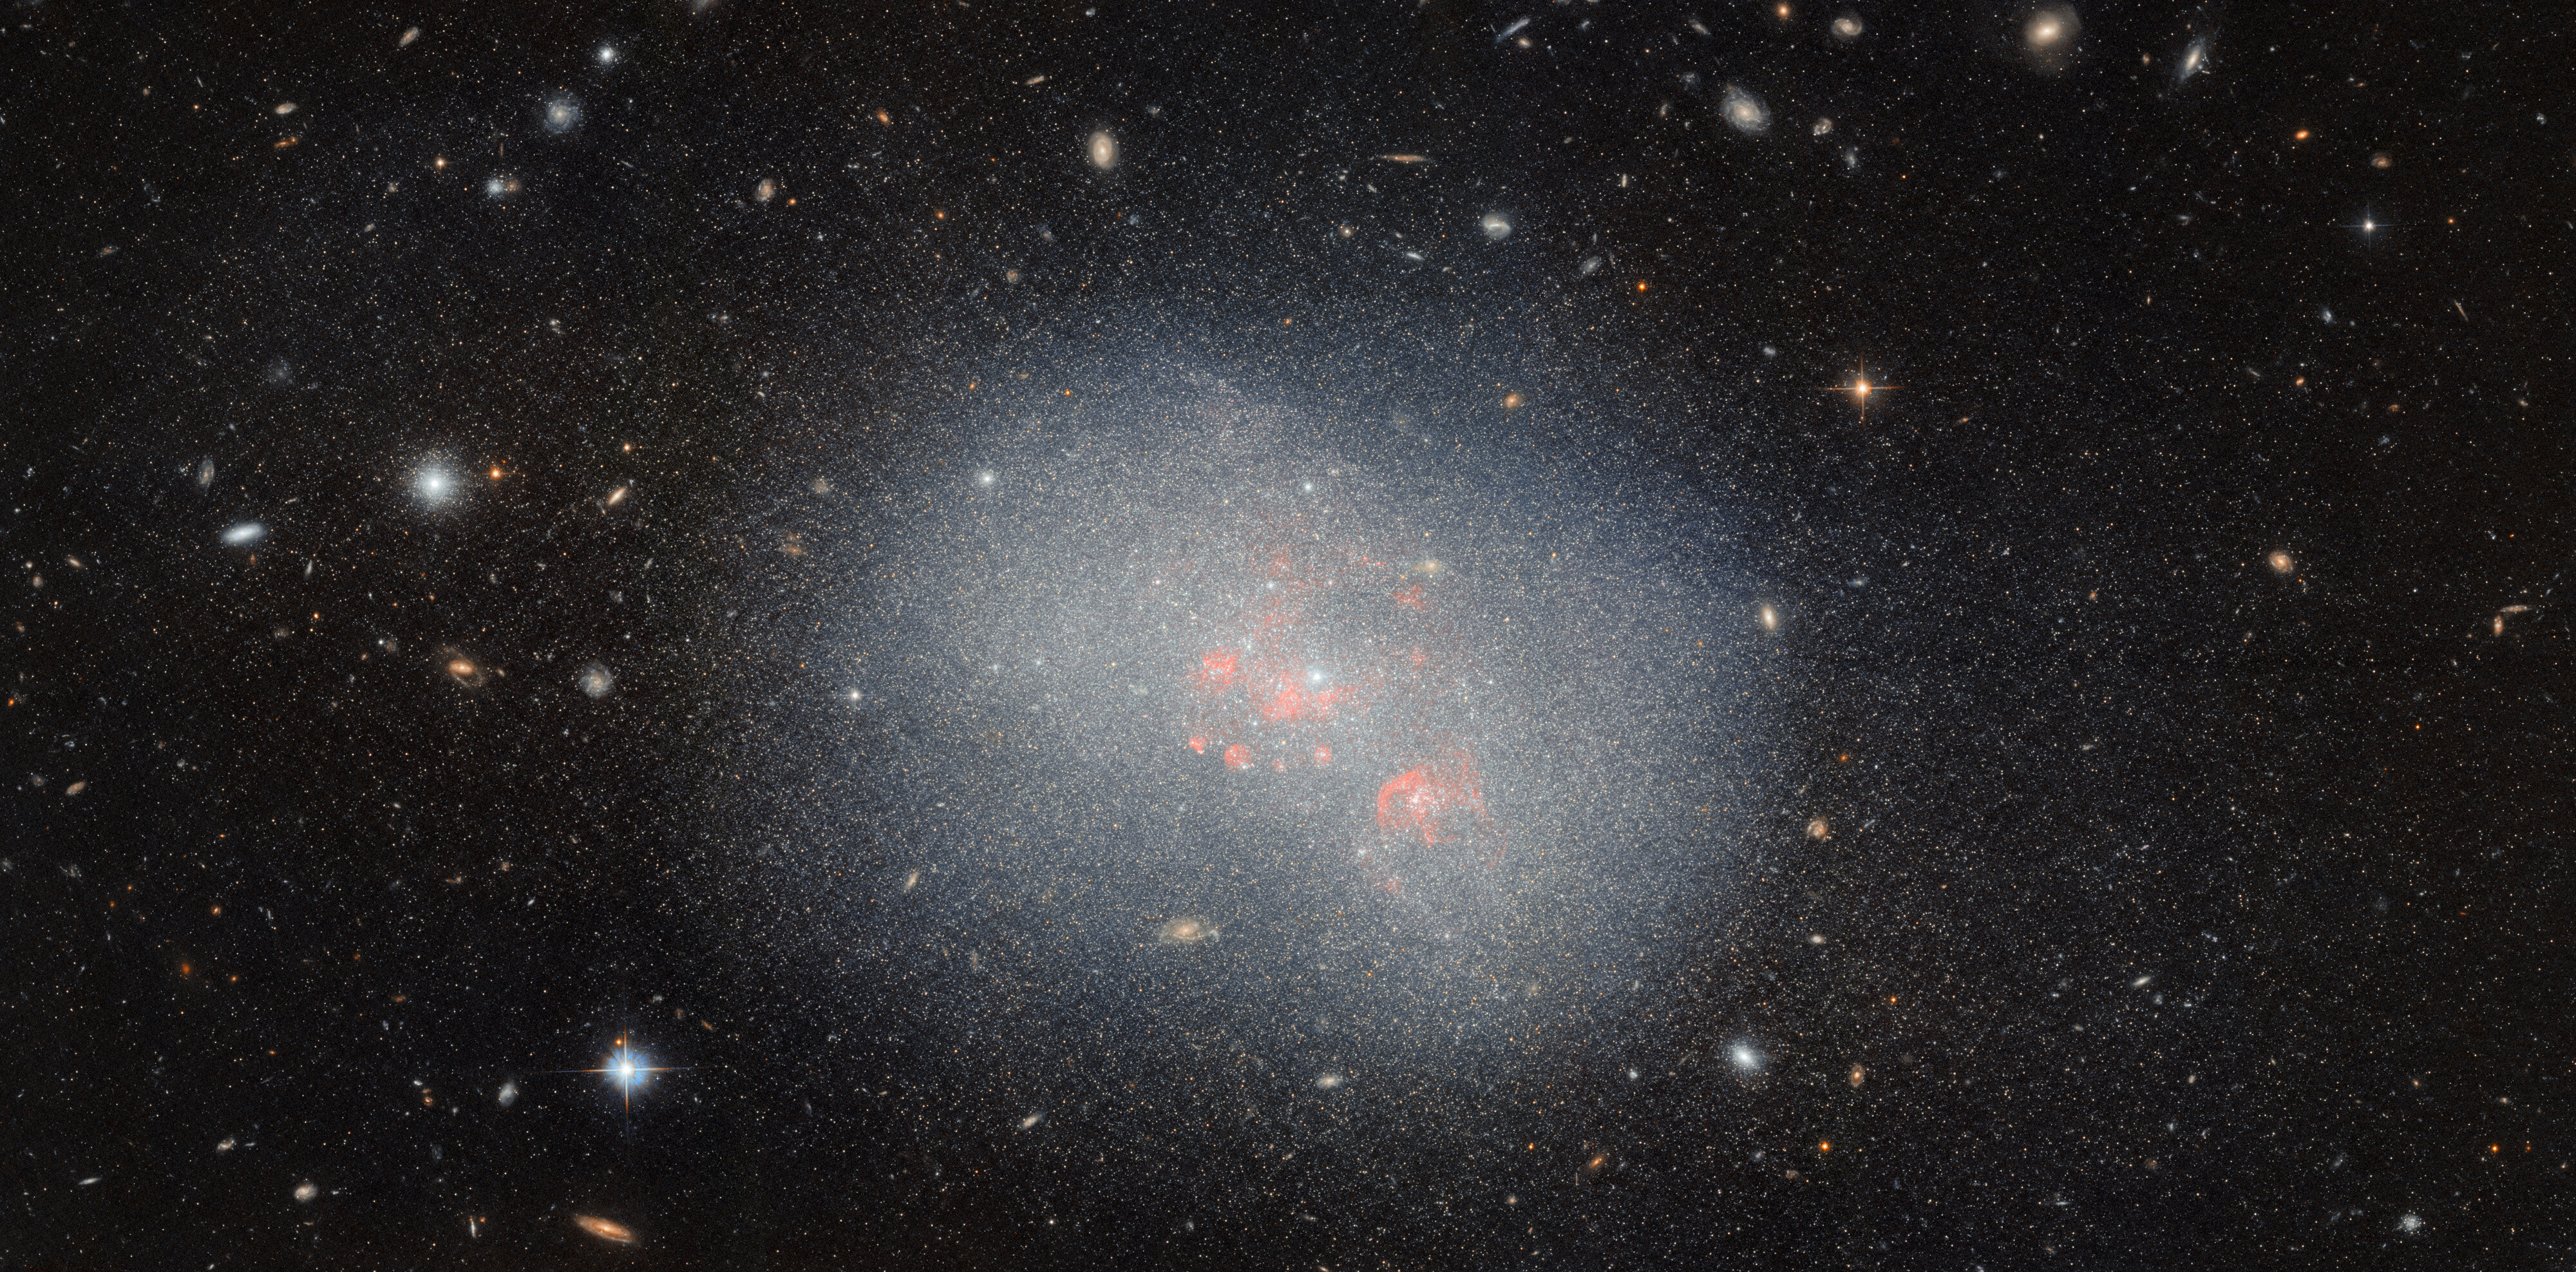 Hubble Studies a Potential Galactic Merger